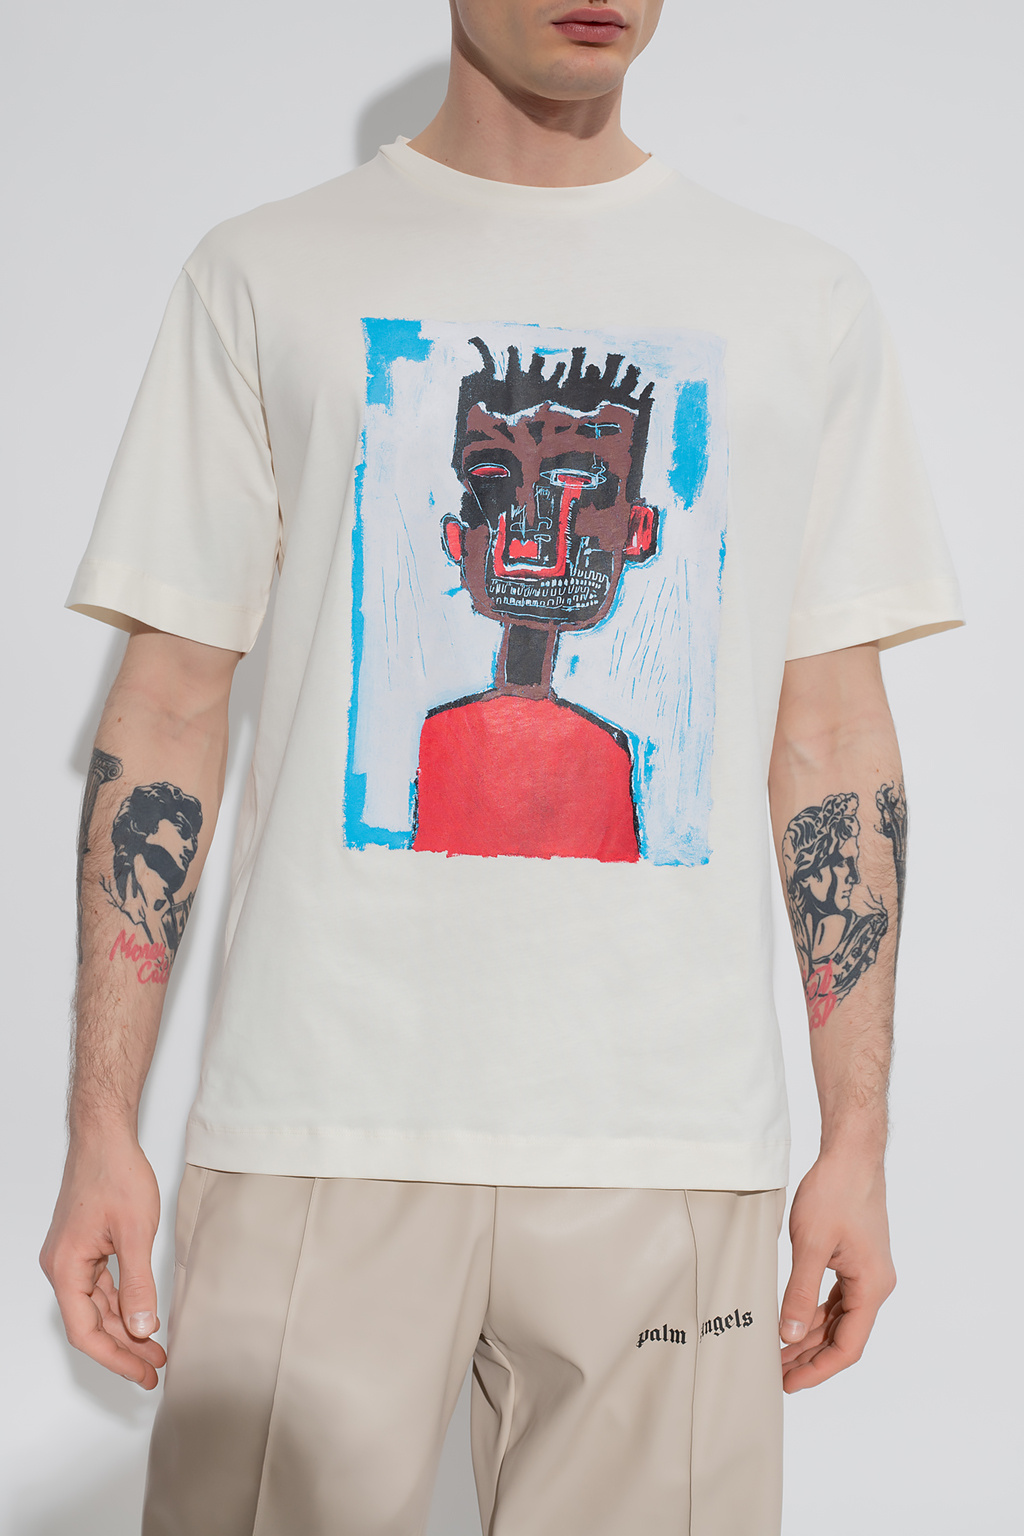 Etudes Etudes X Jean-Michel Basquiat